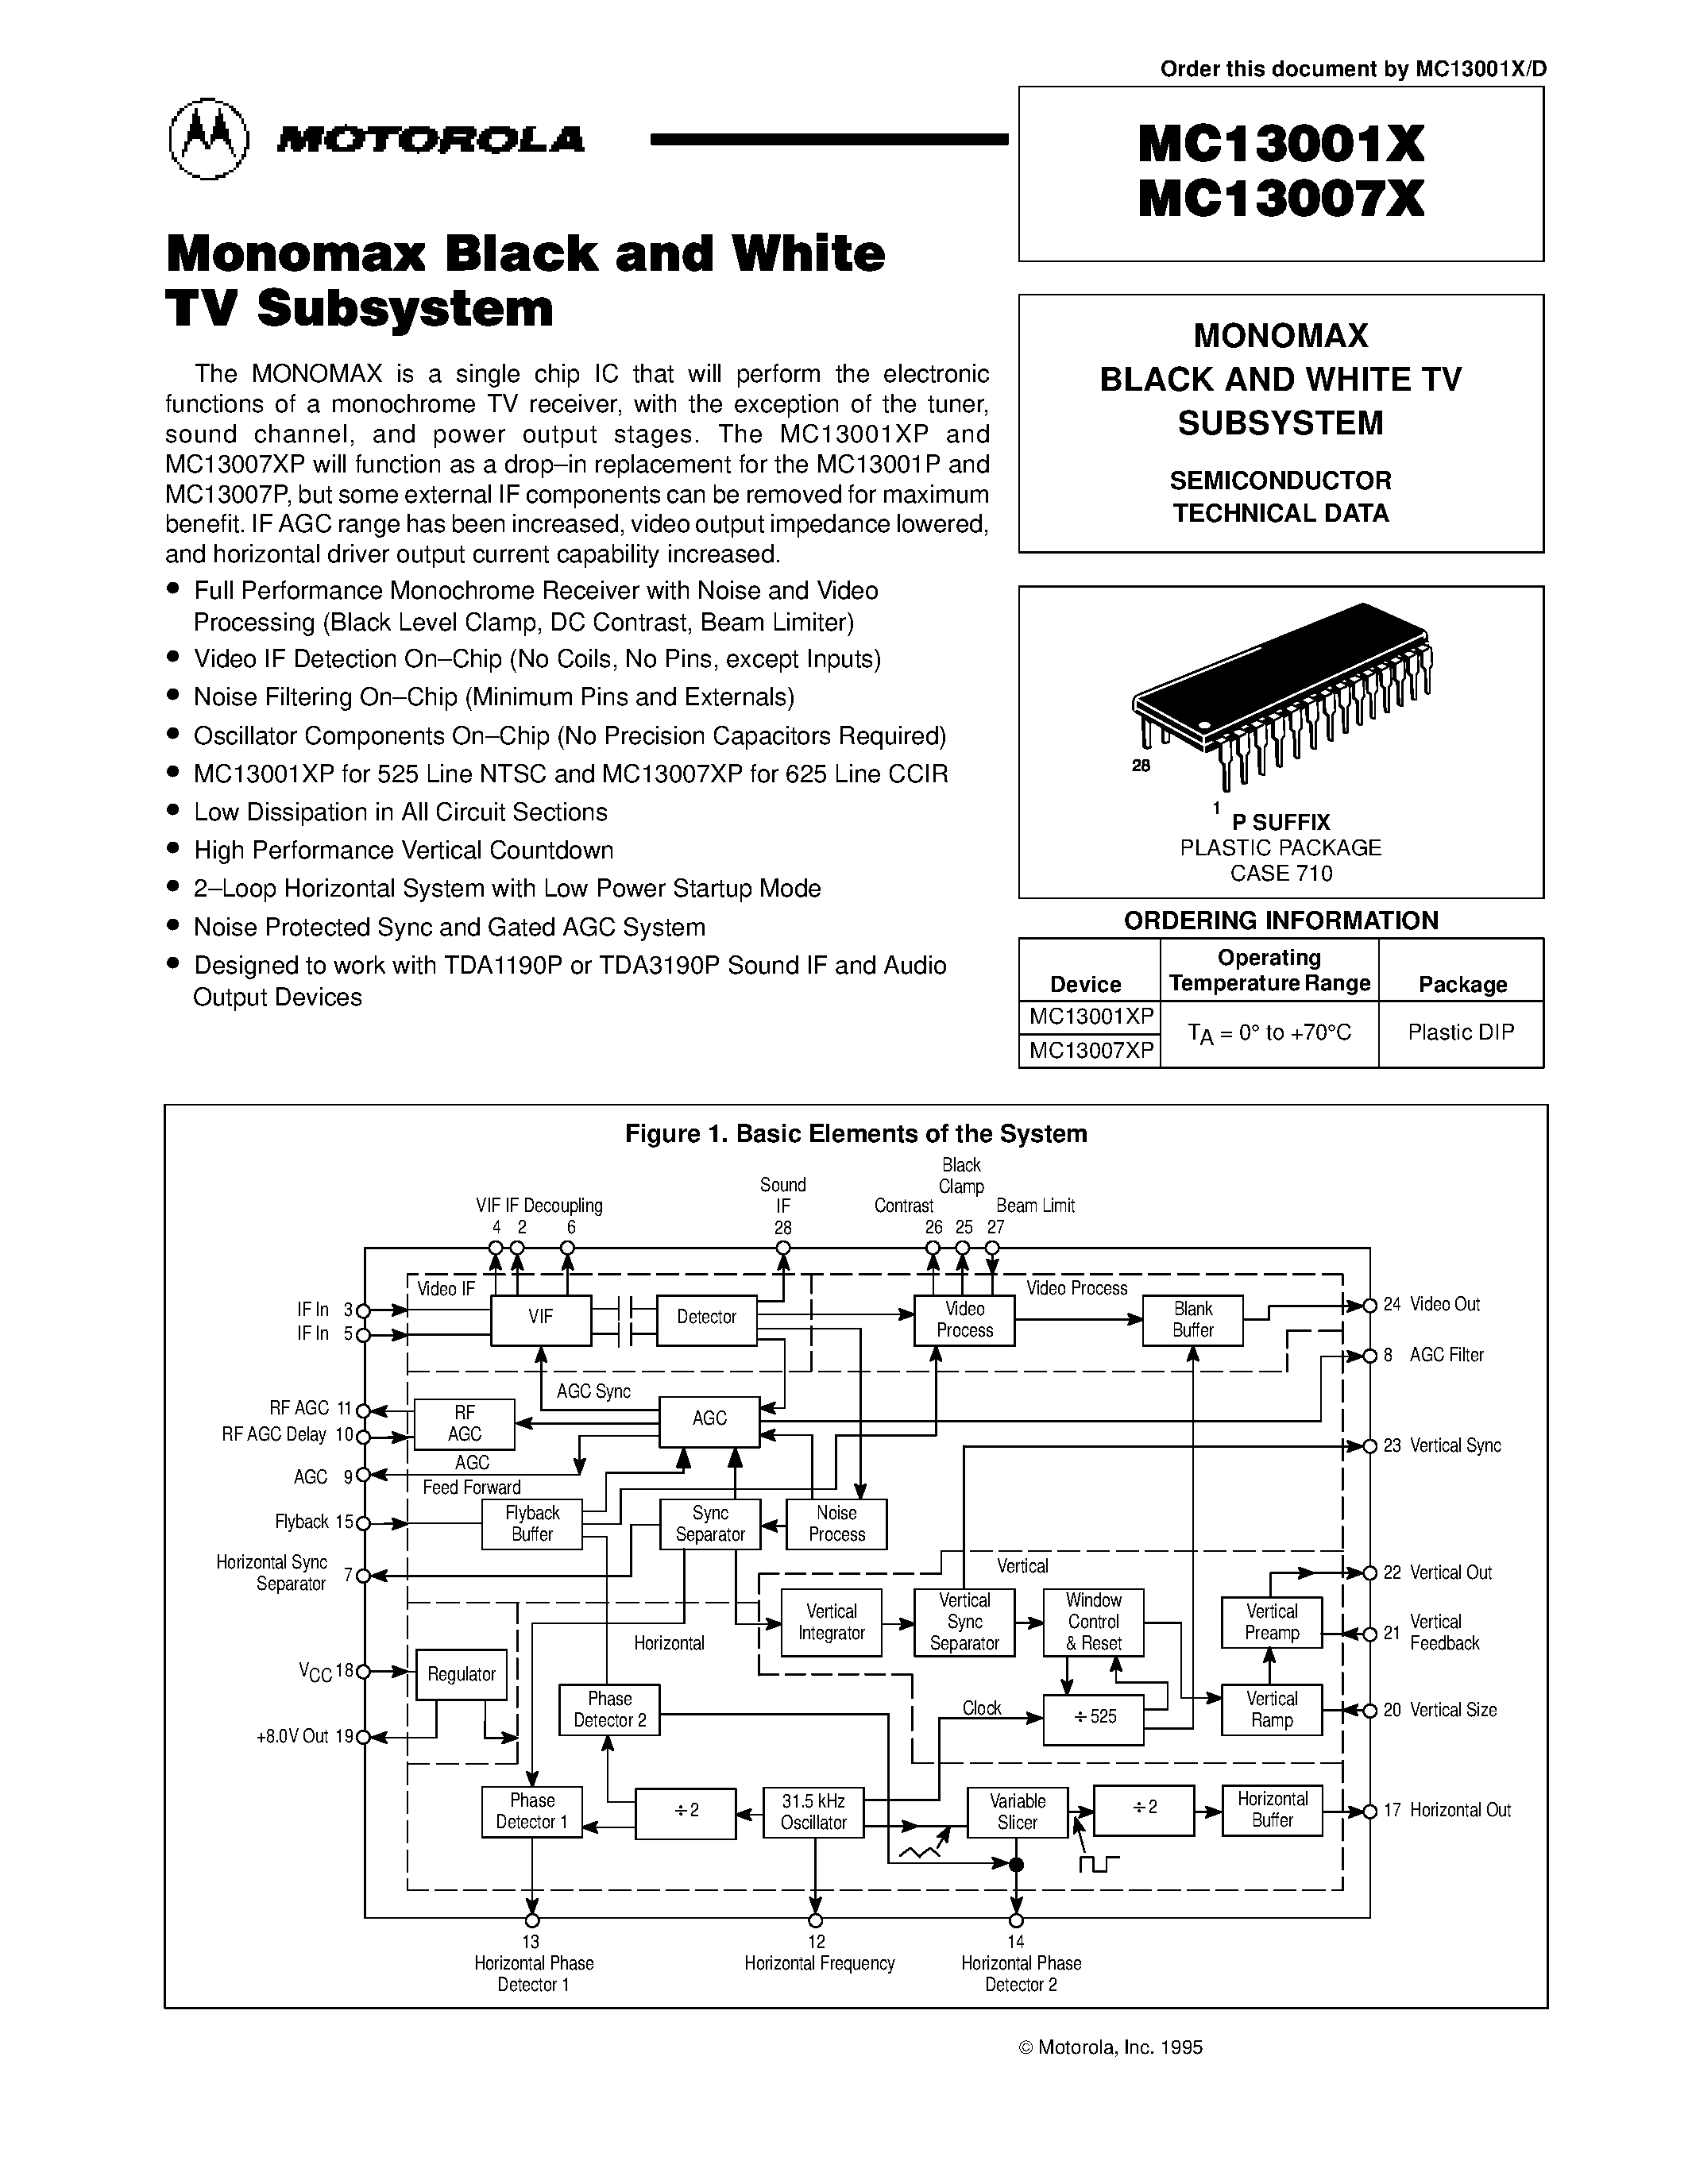 Datasheet MC13007XP - MONOMAX BLACK AND WHITE TV SUBSYSTEM page 1